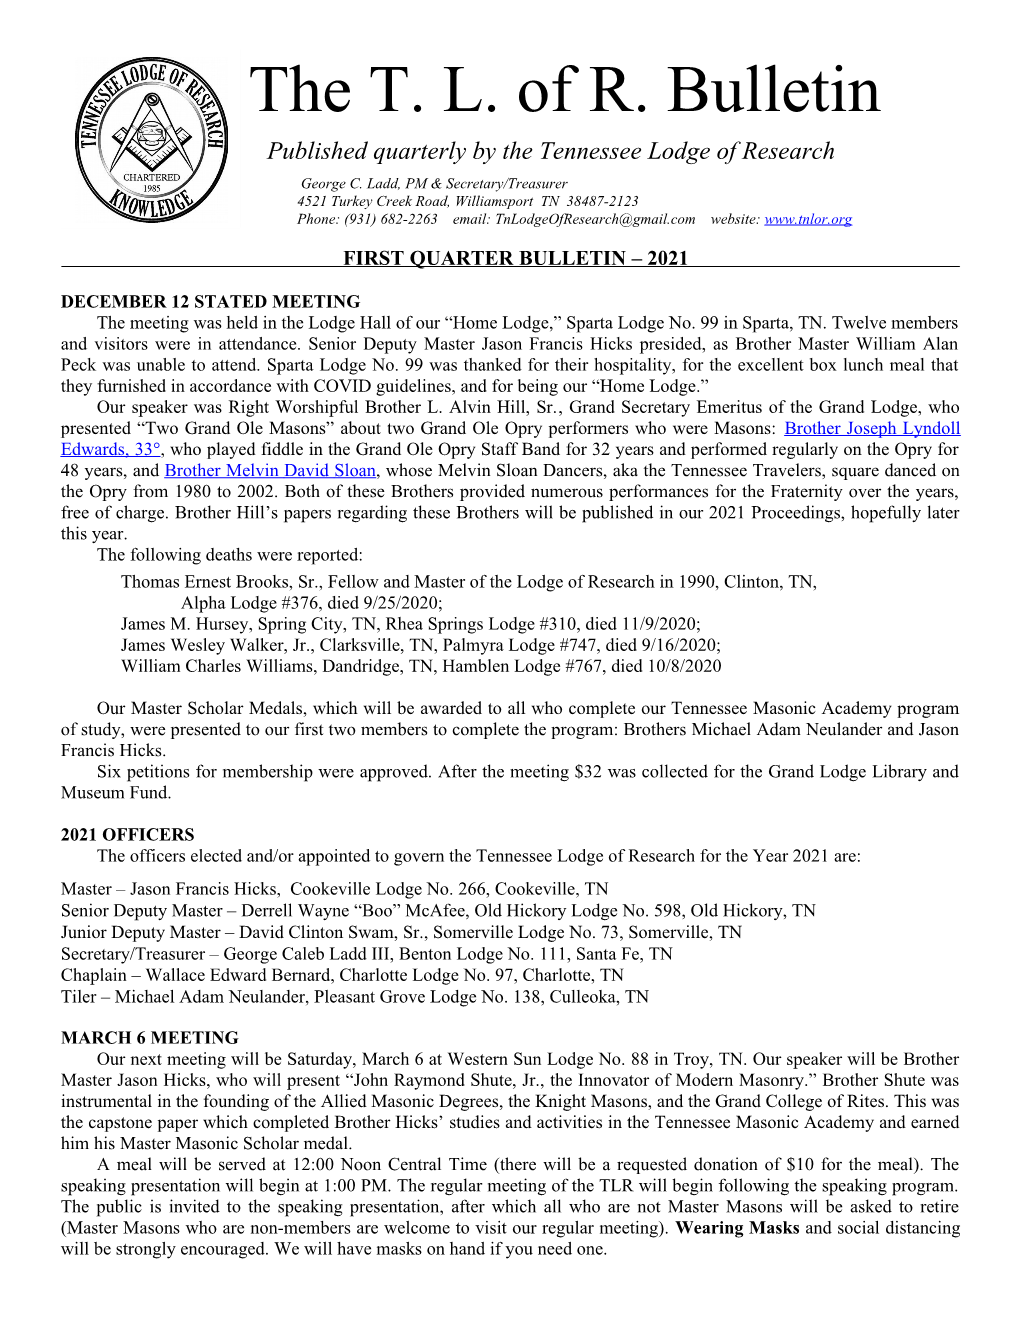 TN Lodge of Research 1St Quarter Bulletin 2021